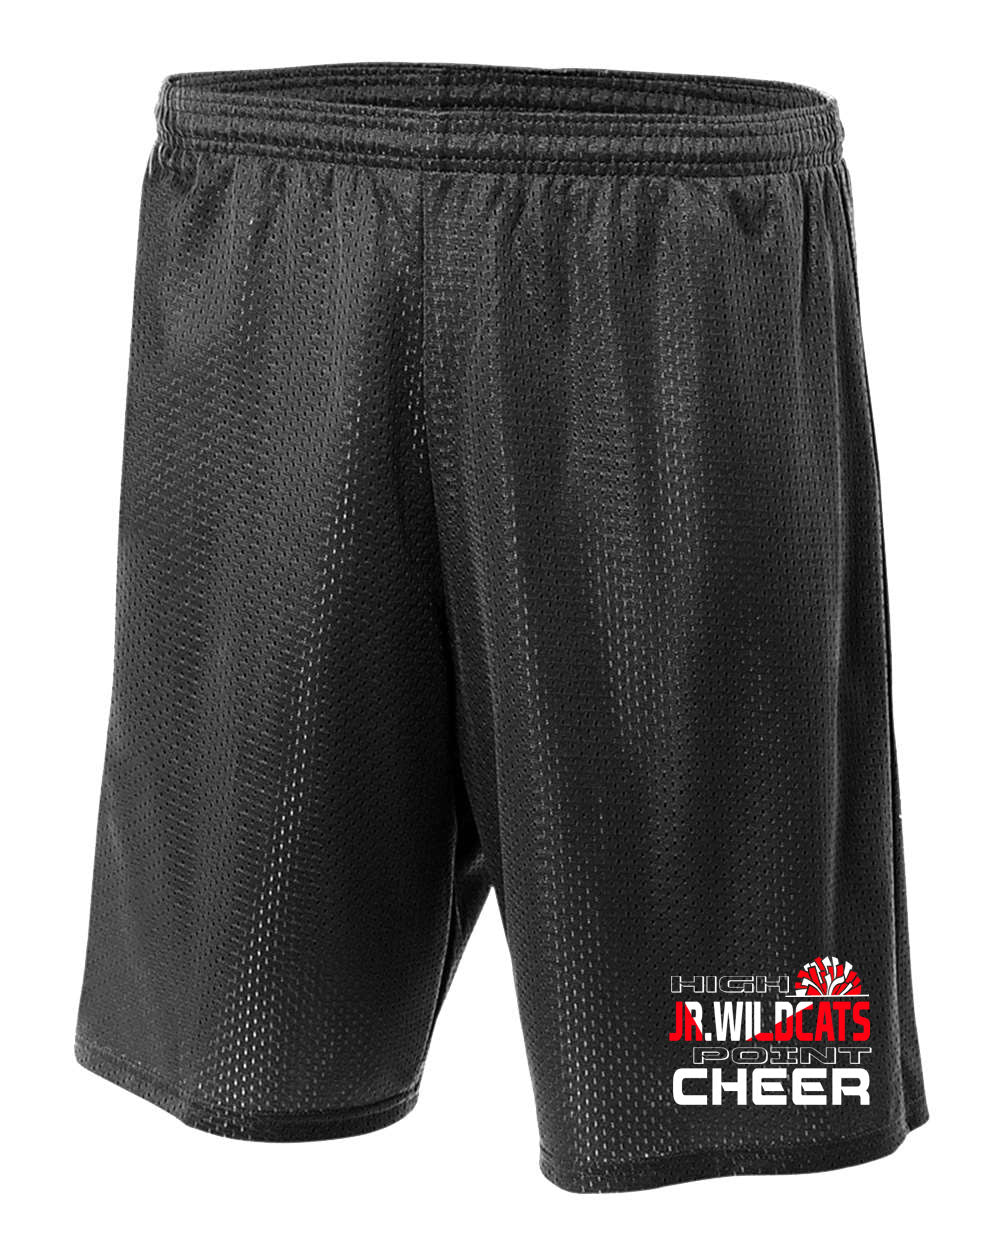 High Point Cheer Design 5 Shorts